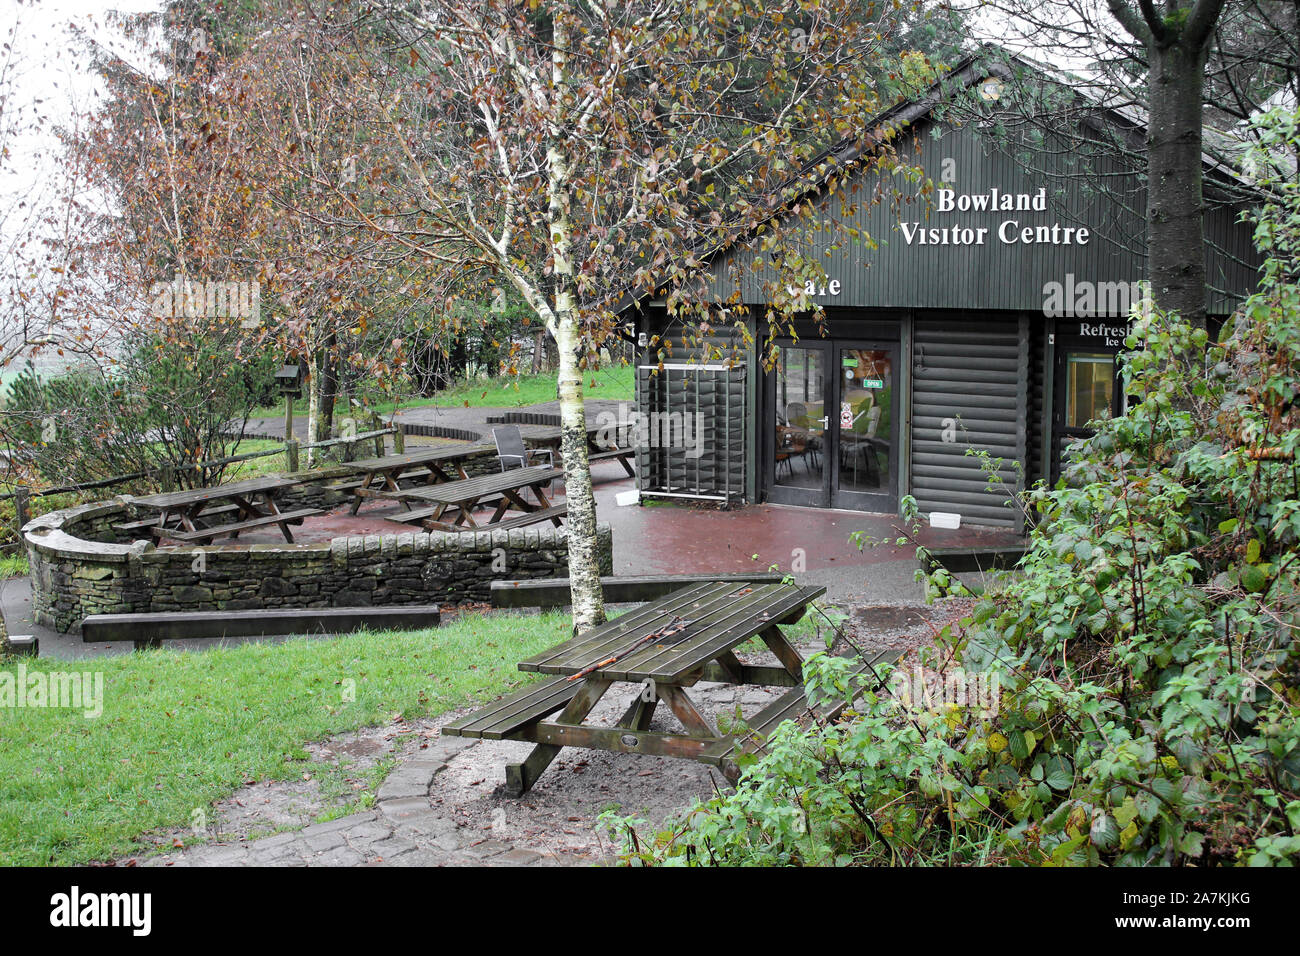 Bowland Visitor Centre, Beacon Fell Country Park, Lancashire, UK Stock Photo